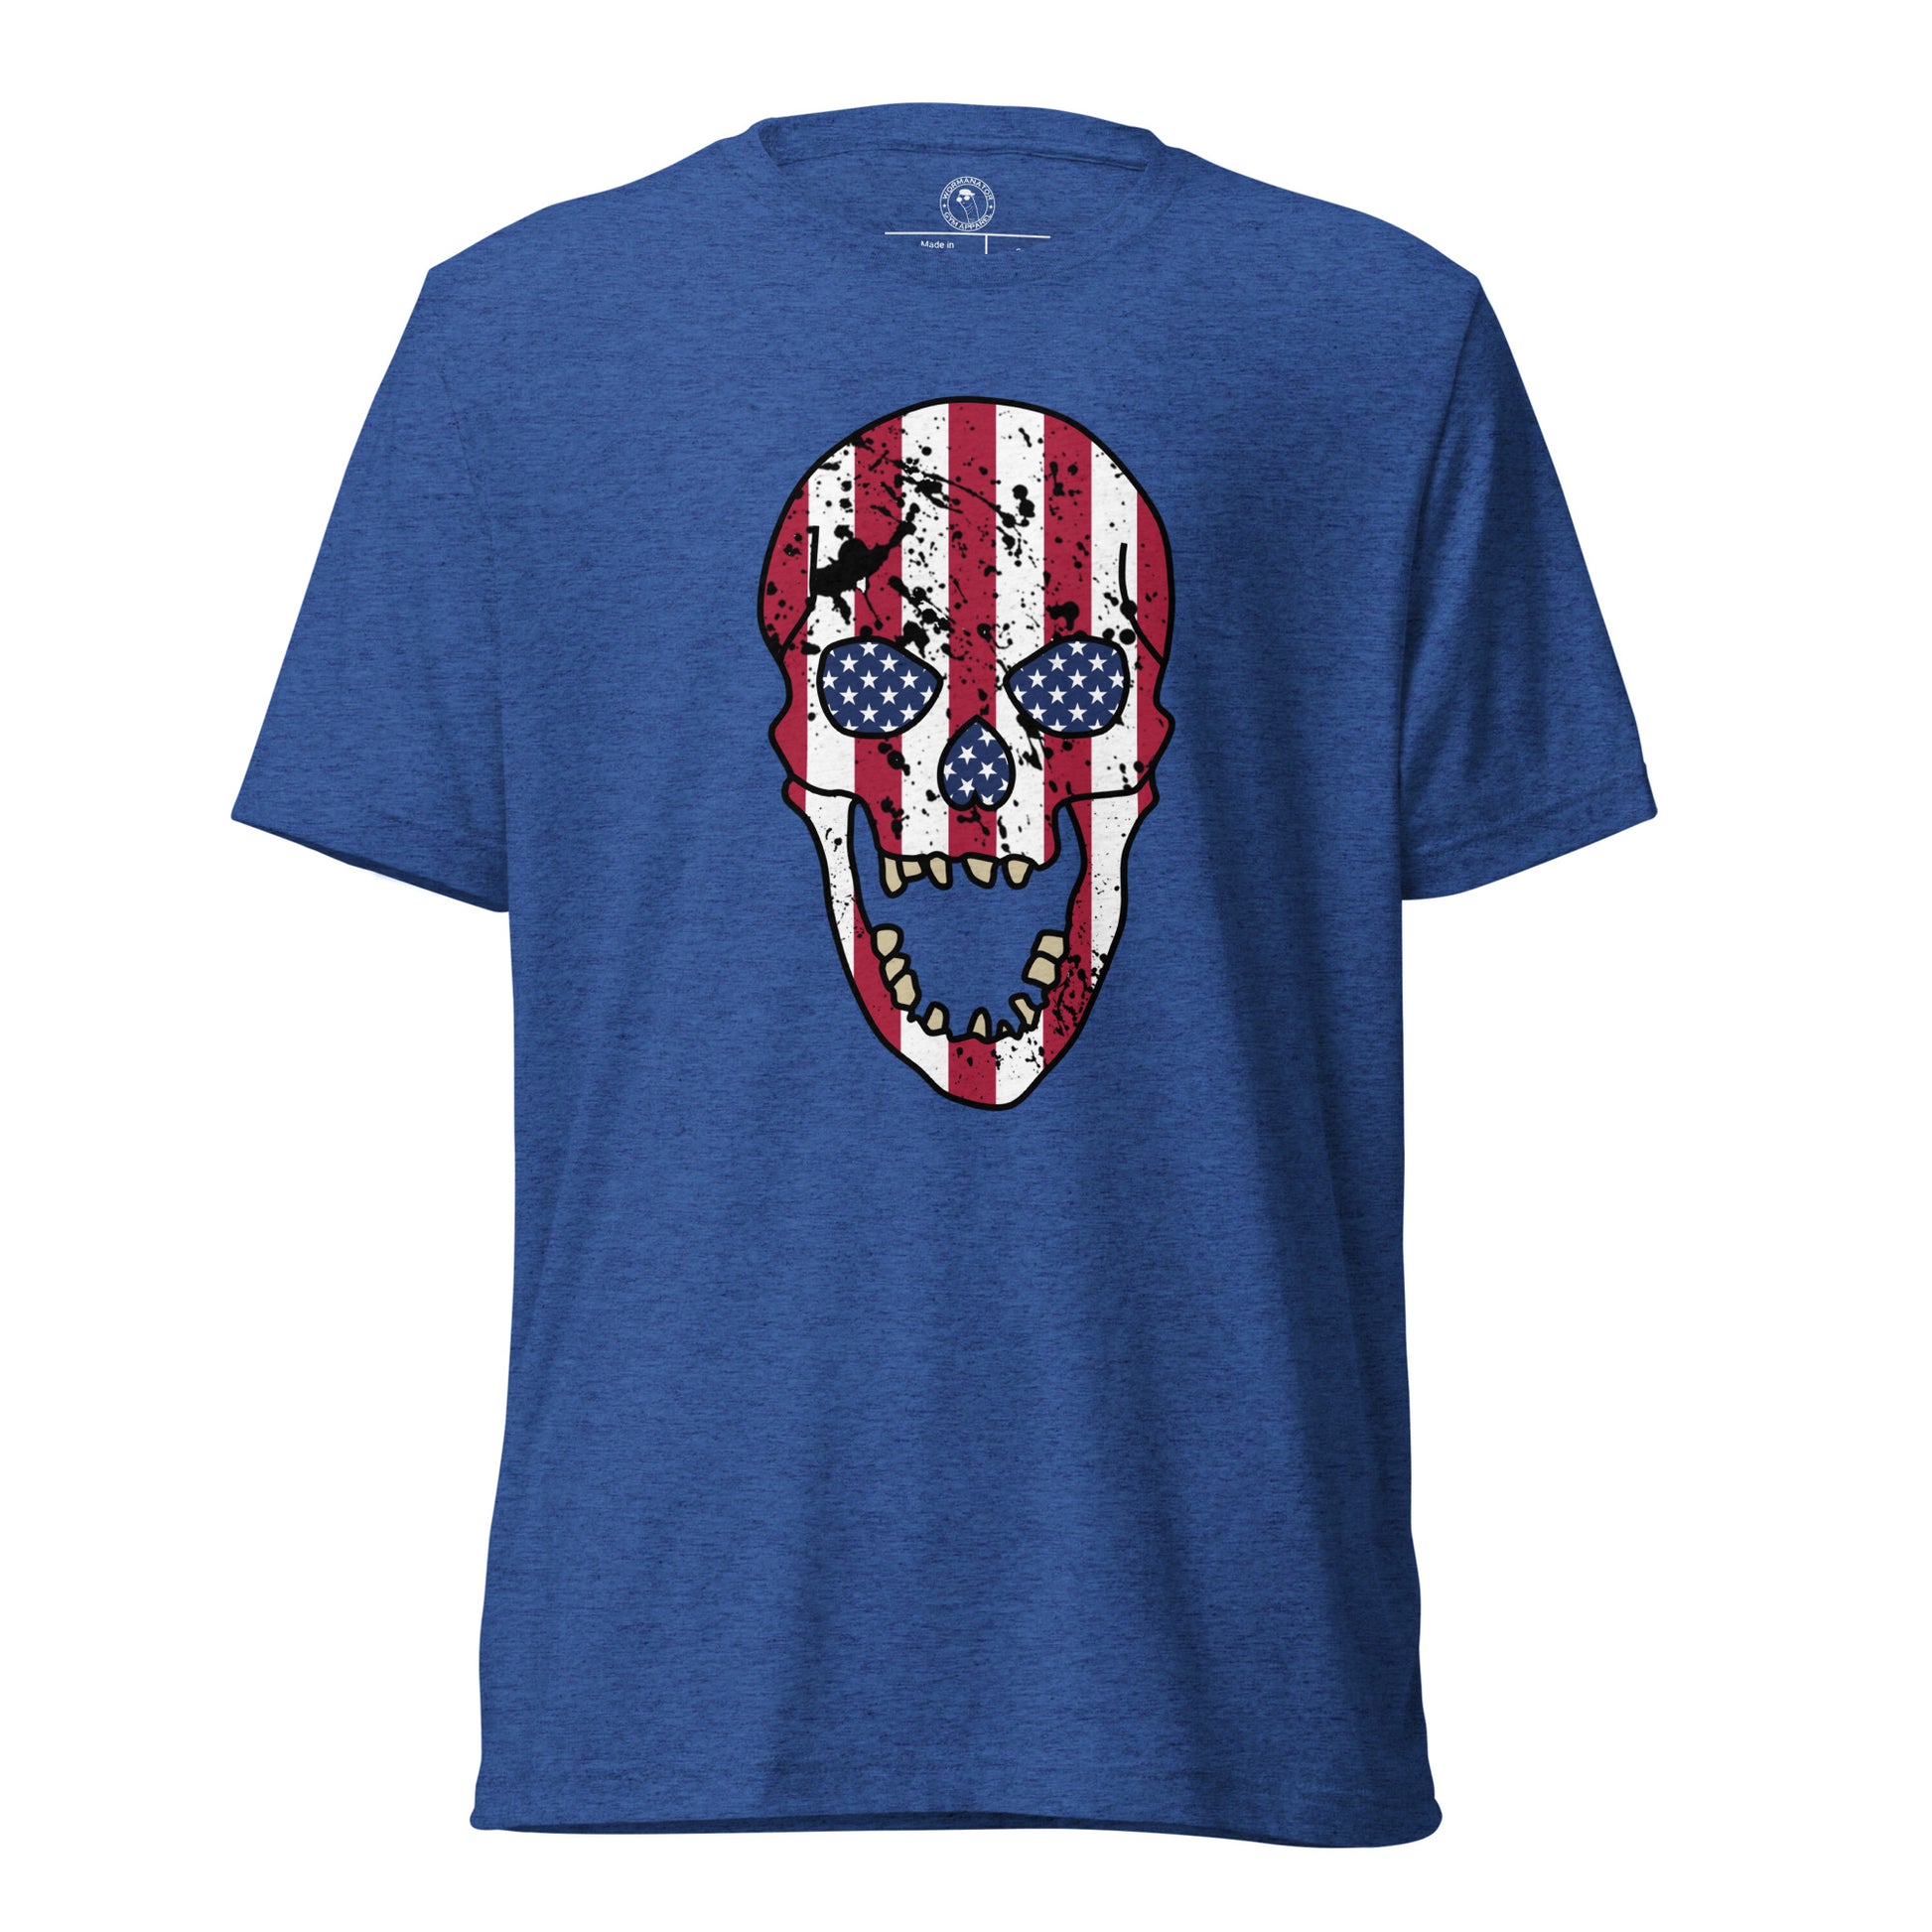 USA Skull Shirt - American Flag Punisher - True Royal Triblend